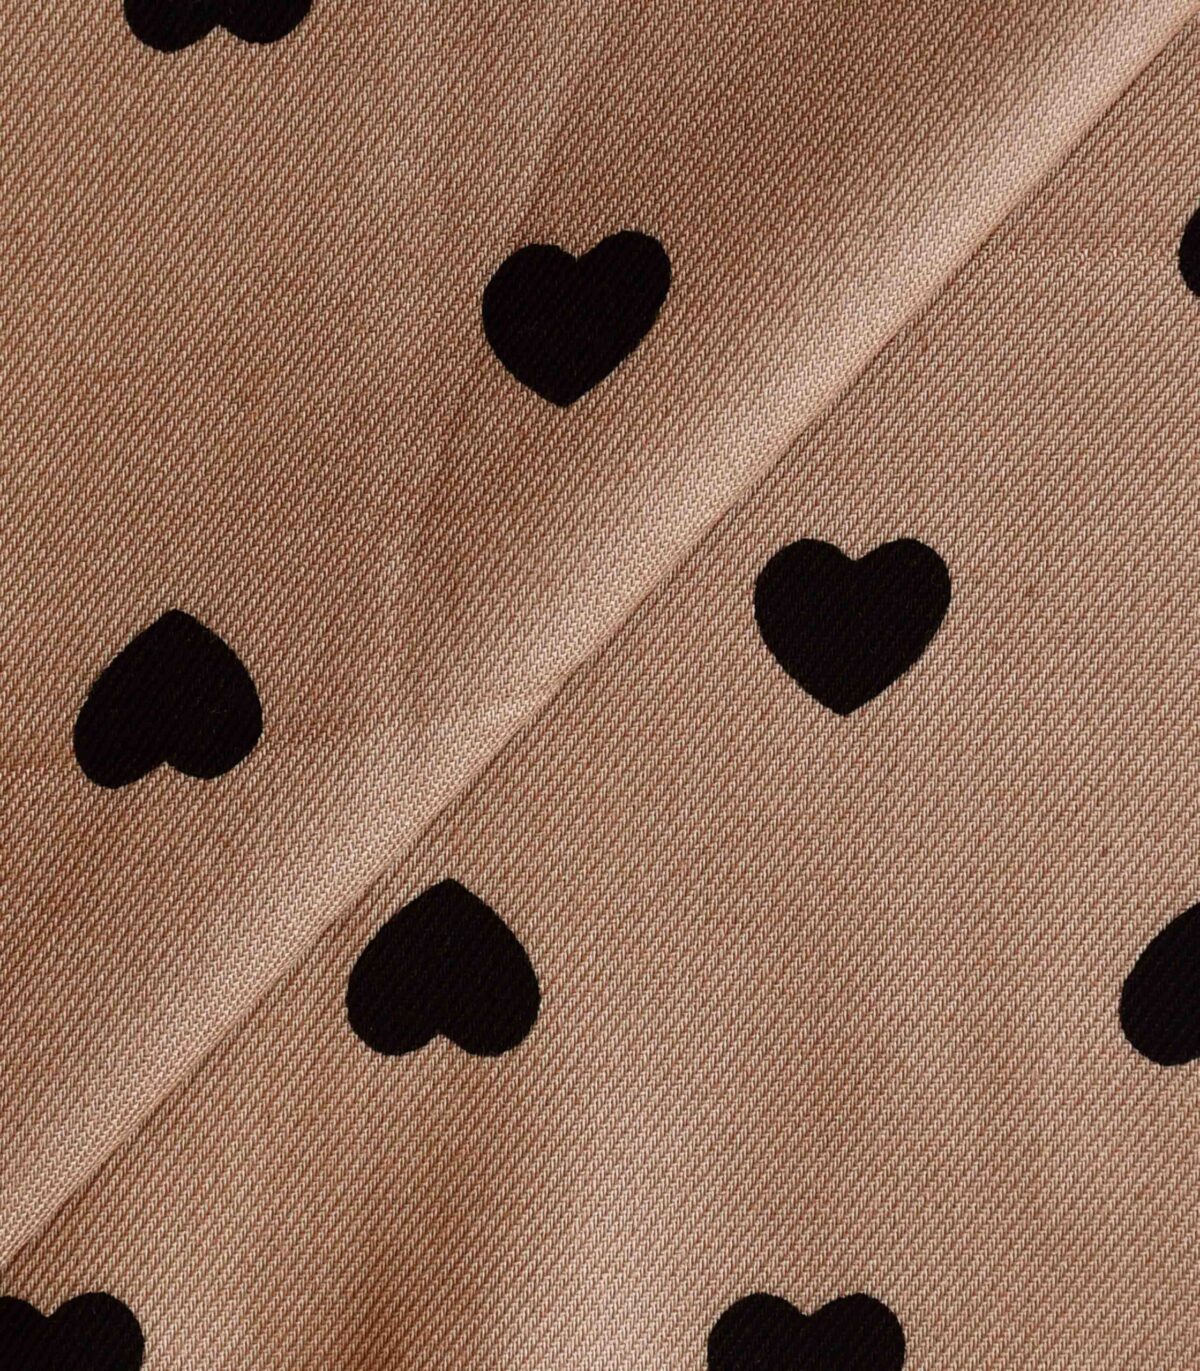 Viscose Black Heart Print Woven Fabric